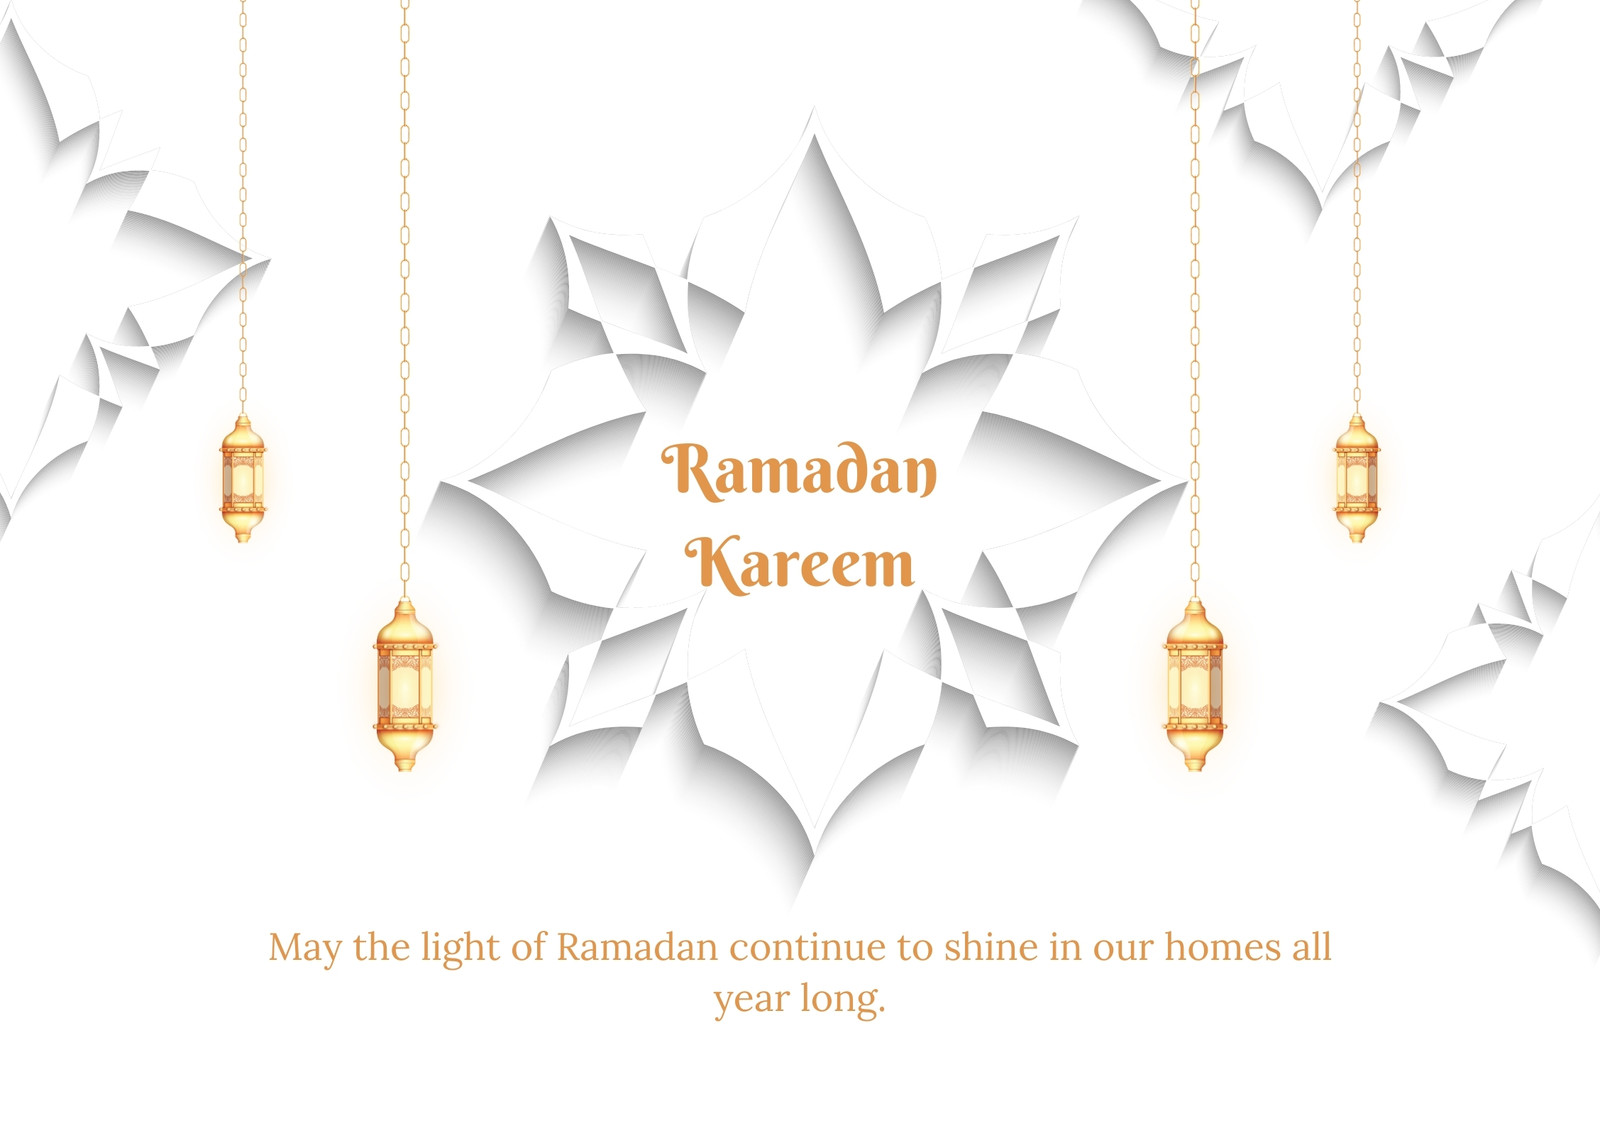 Ramadan Greeting Card Image & Photo (Free Trial)